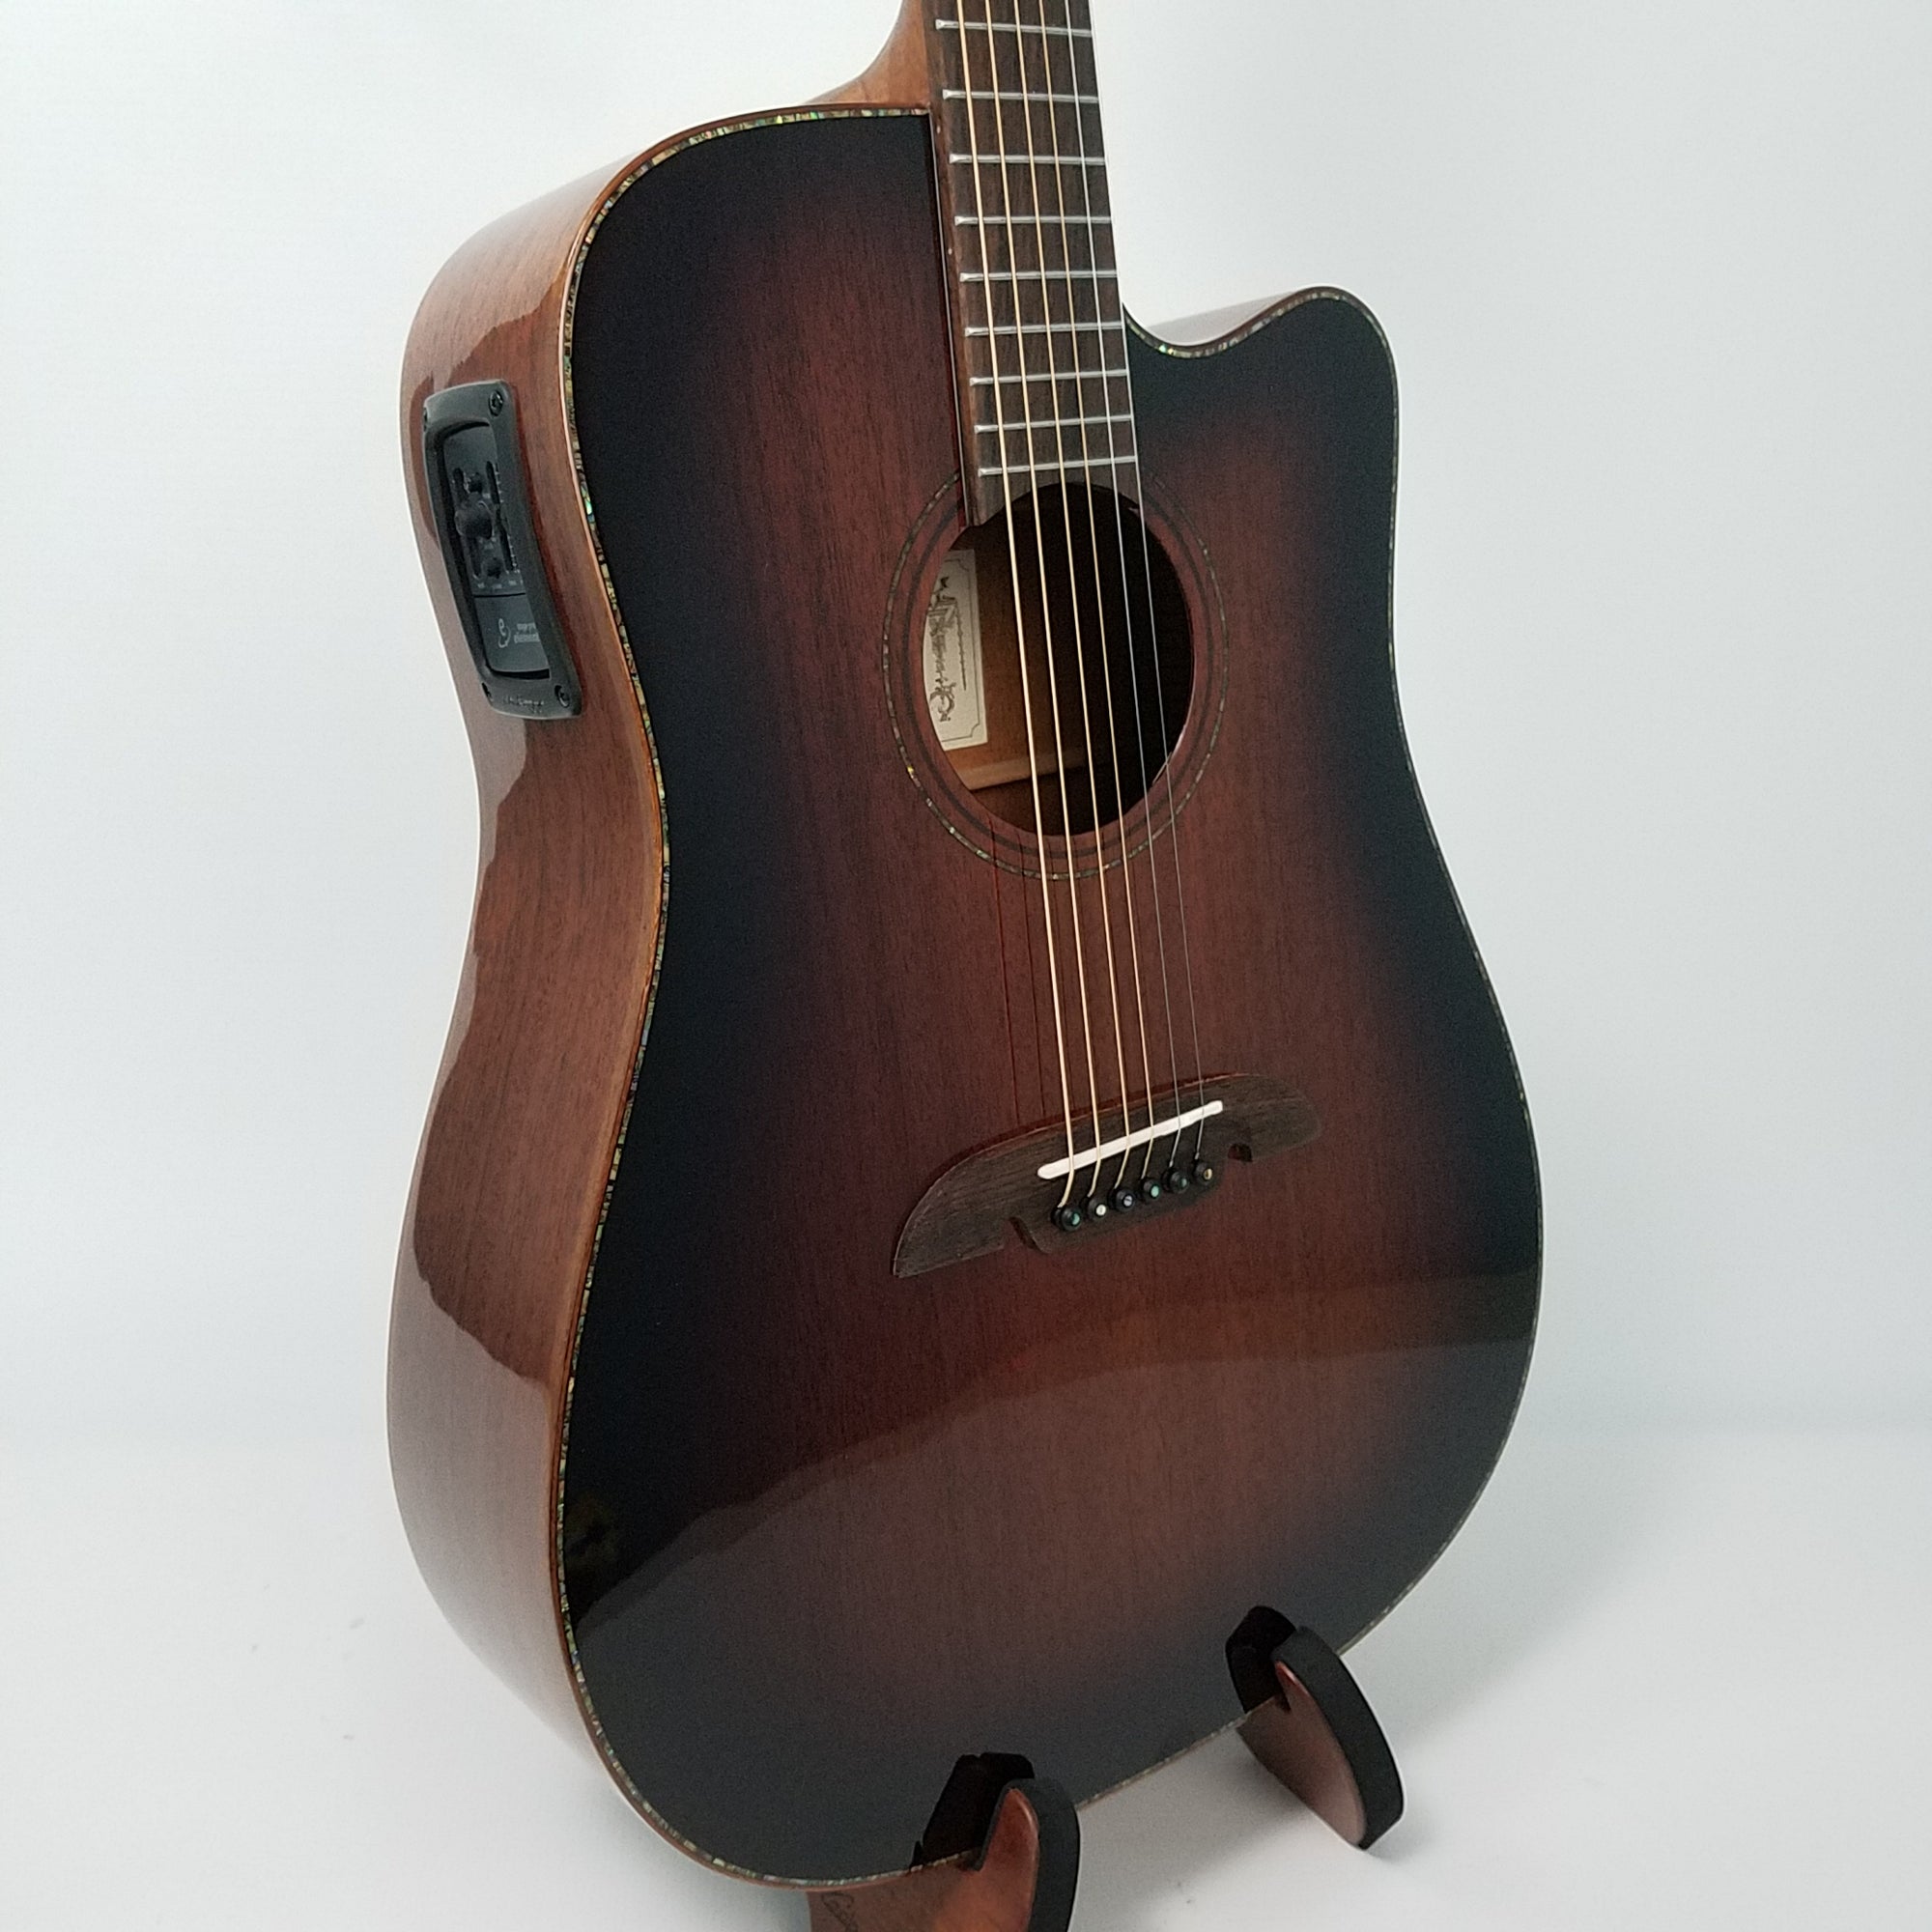 Alvarez Masterworks MDA66CESHB Acoustic Electric Guitar Body Left Side